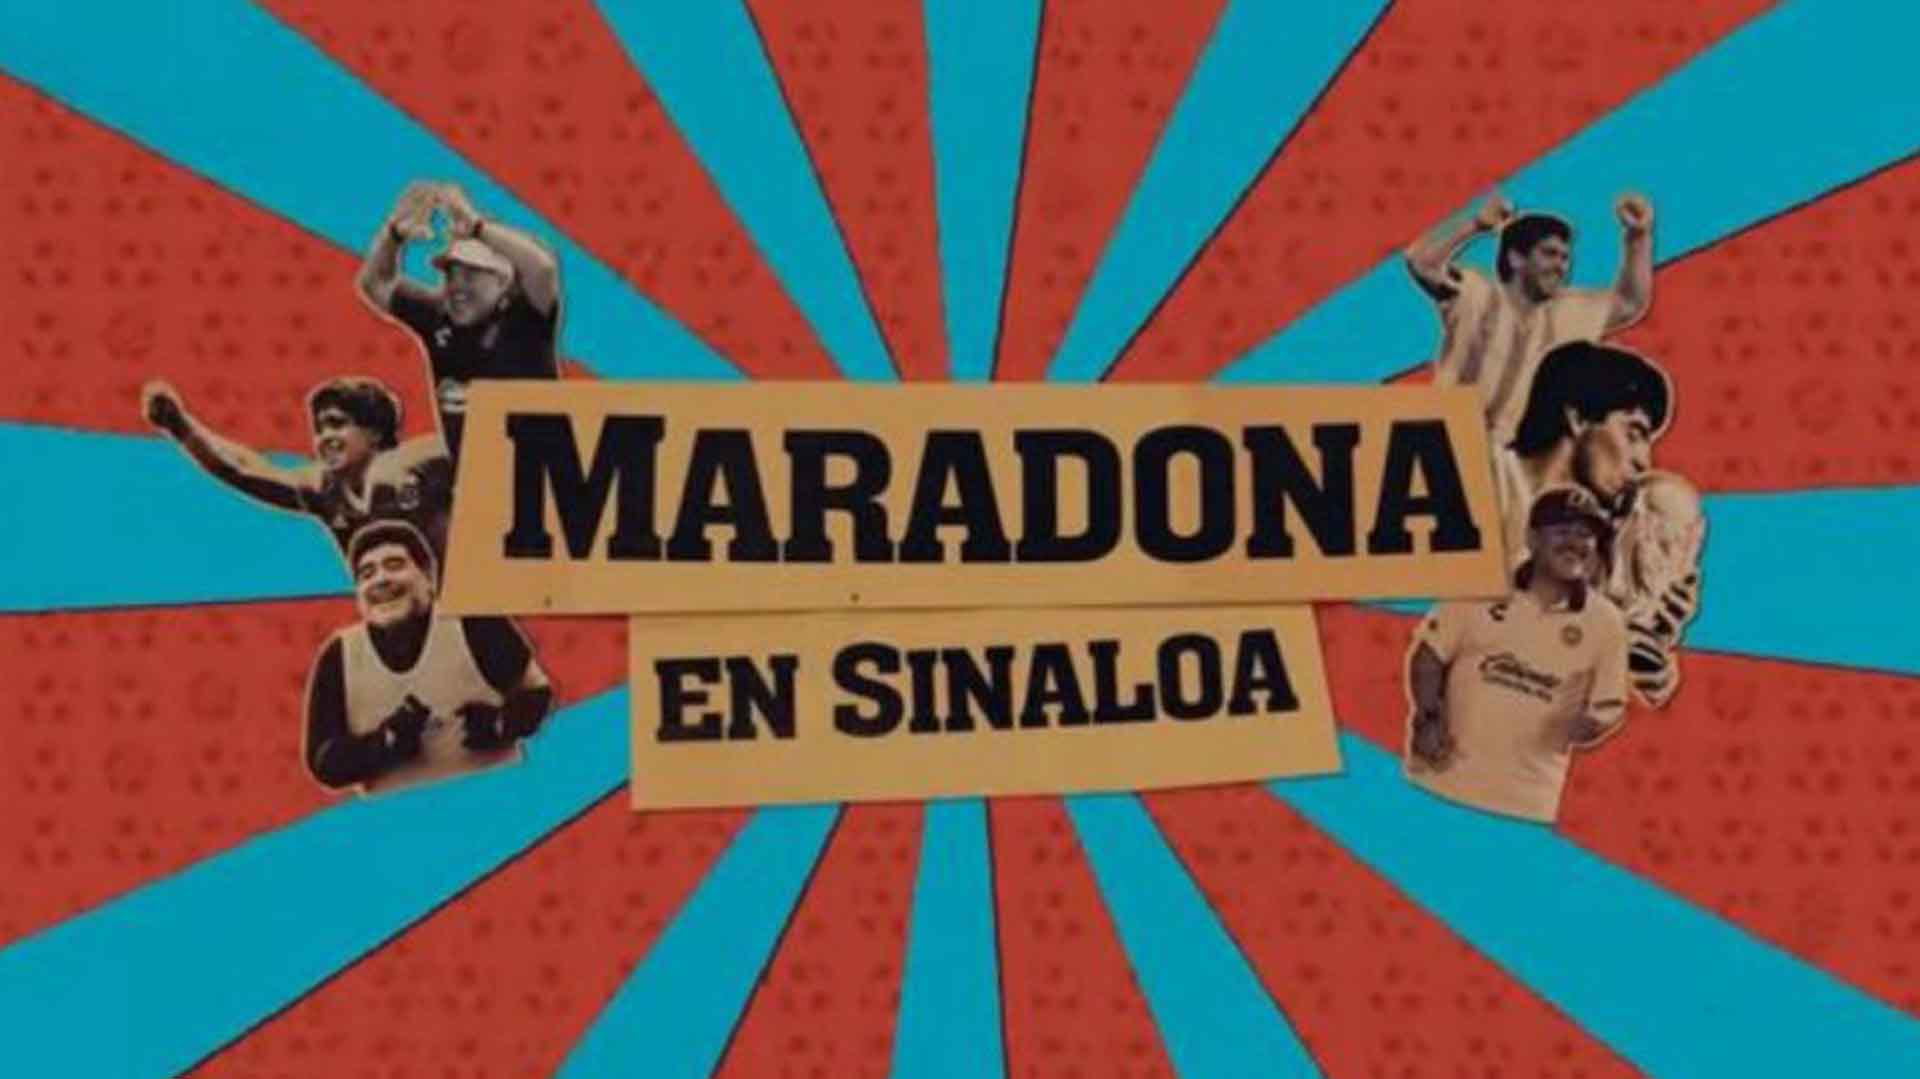 Maradona en Sinaloa: El hogar menos pensado | Season 1 | Episode 6